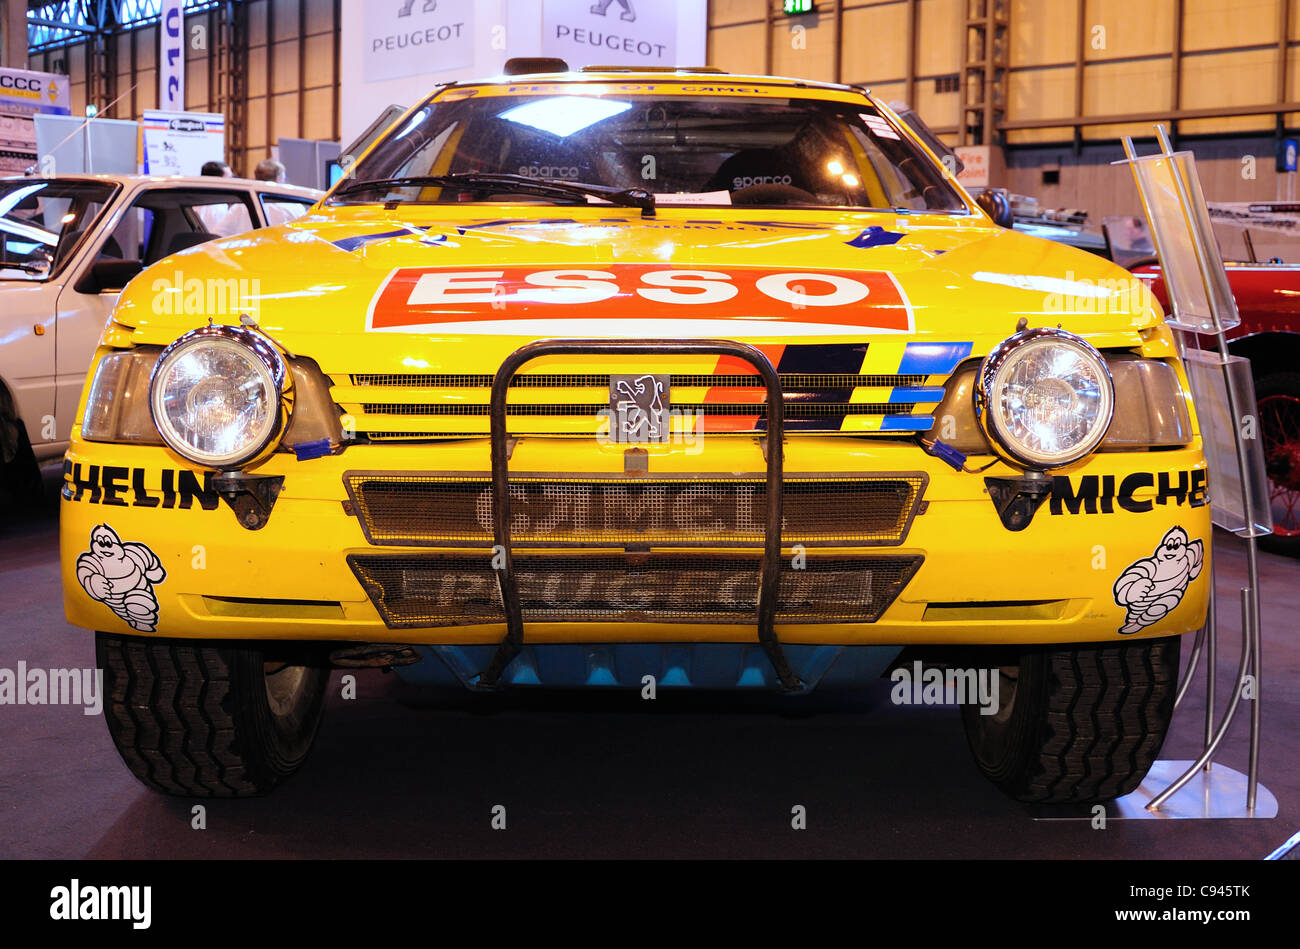 Peugeot 405 Paris-Dakar race winning rally car - The Footman James Classic Motor Show, Birmingham NEC Stock Photo